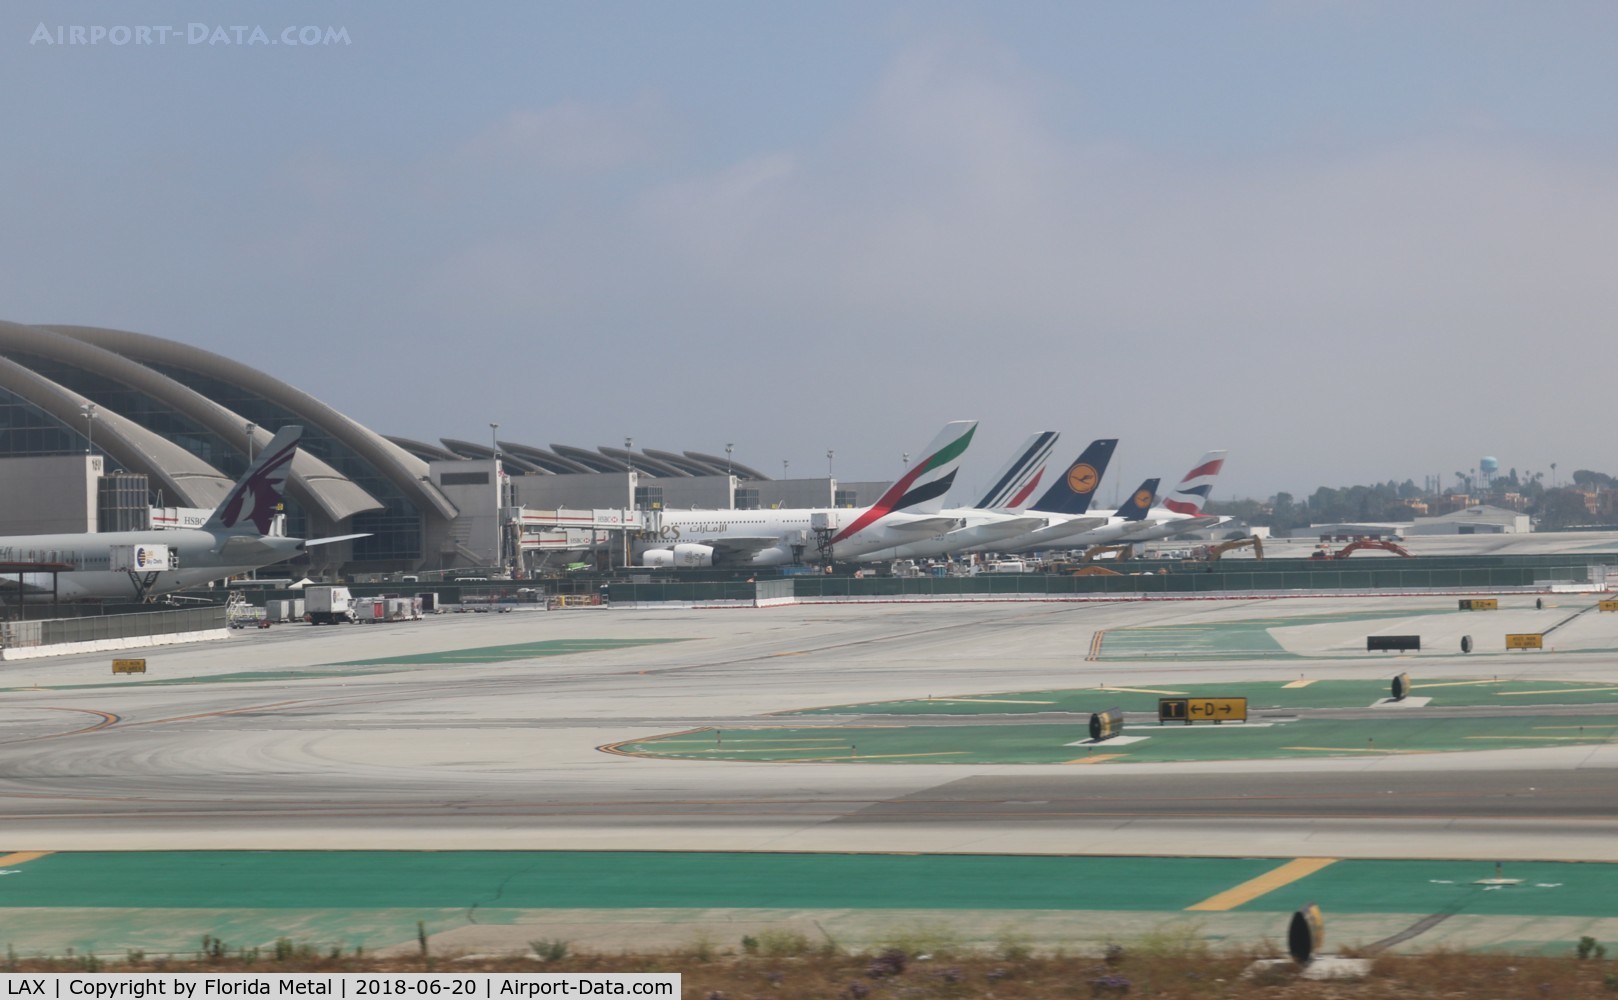 Los Angeles International Airport (LAX) - Departing LAX